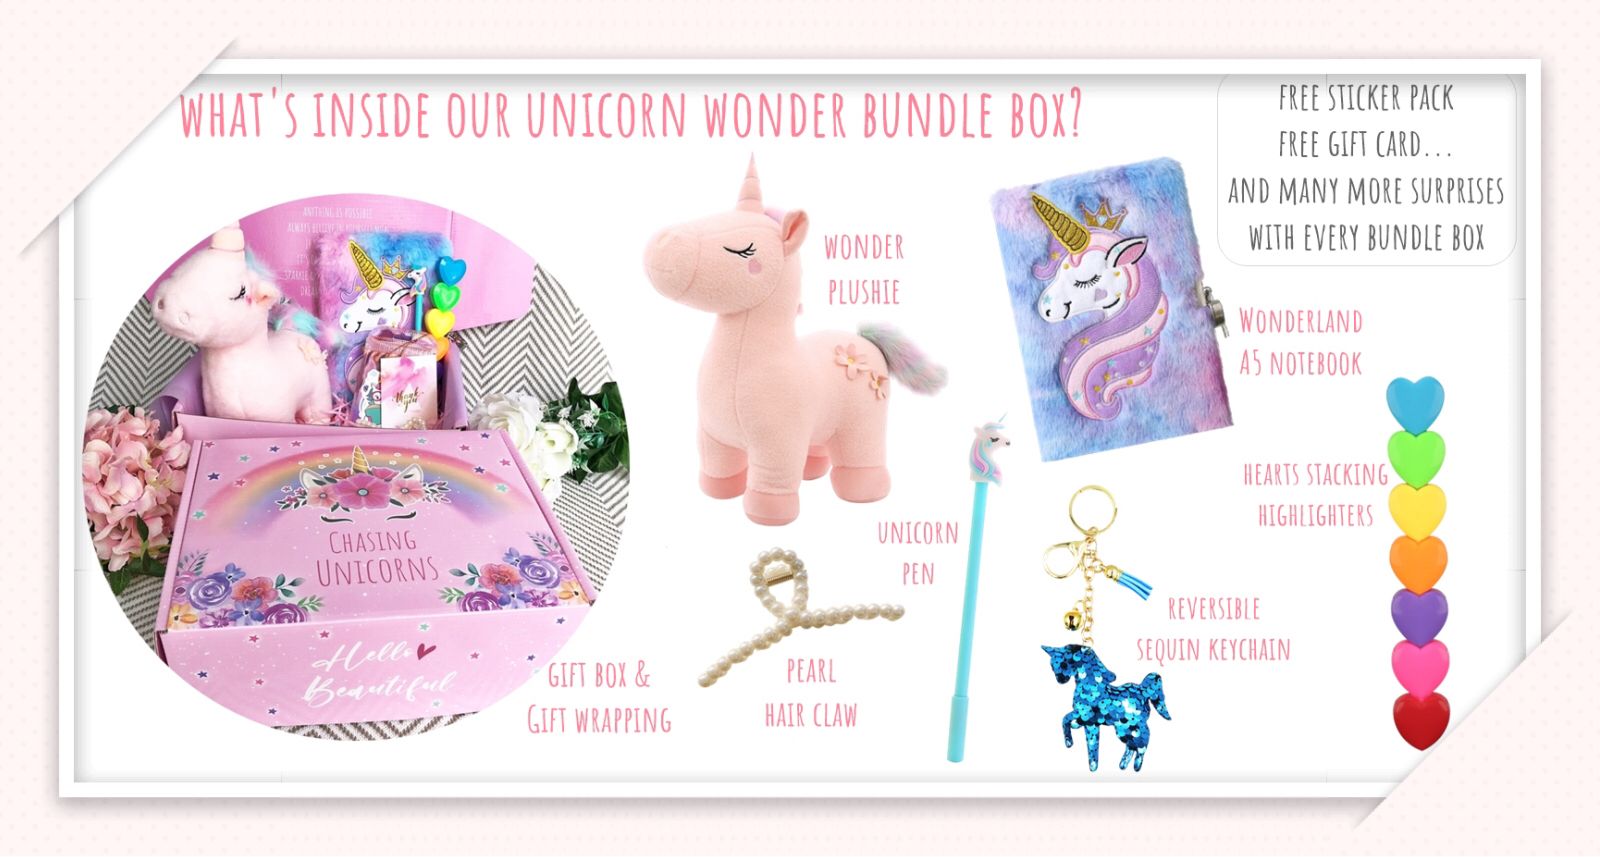 What's inside our Unicorn Wonder bundle box?